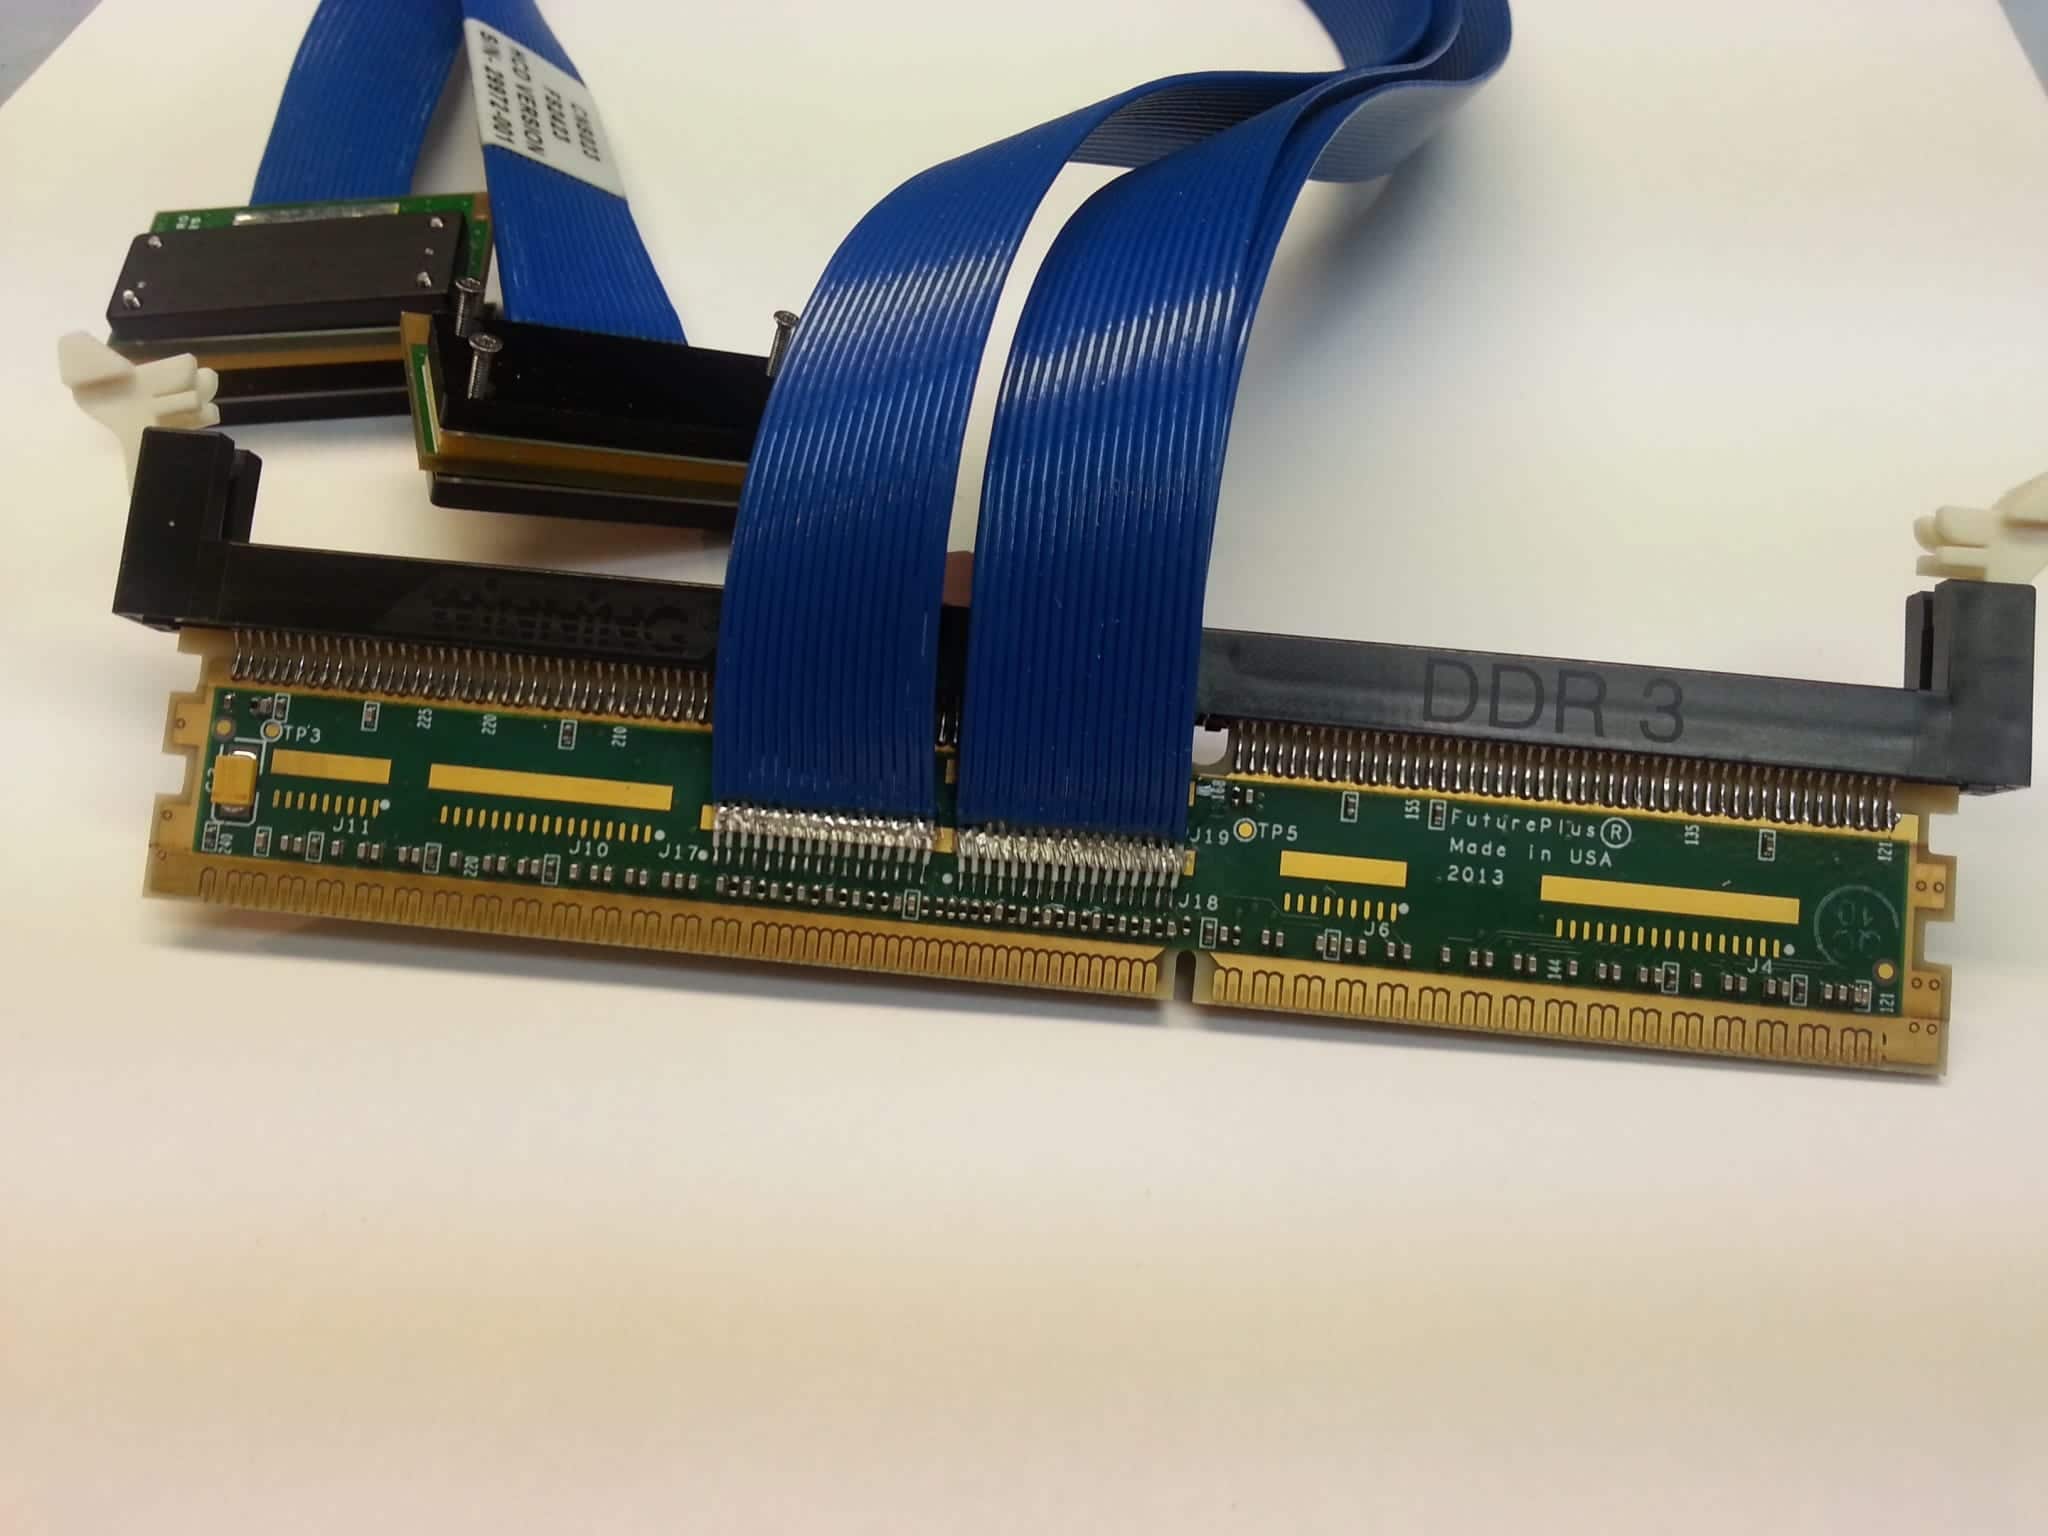 FS2363 DDR3 DIMM Probe